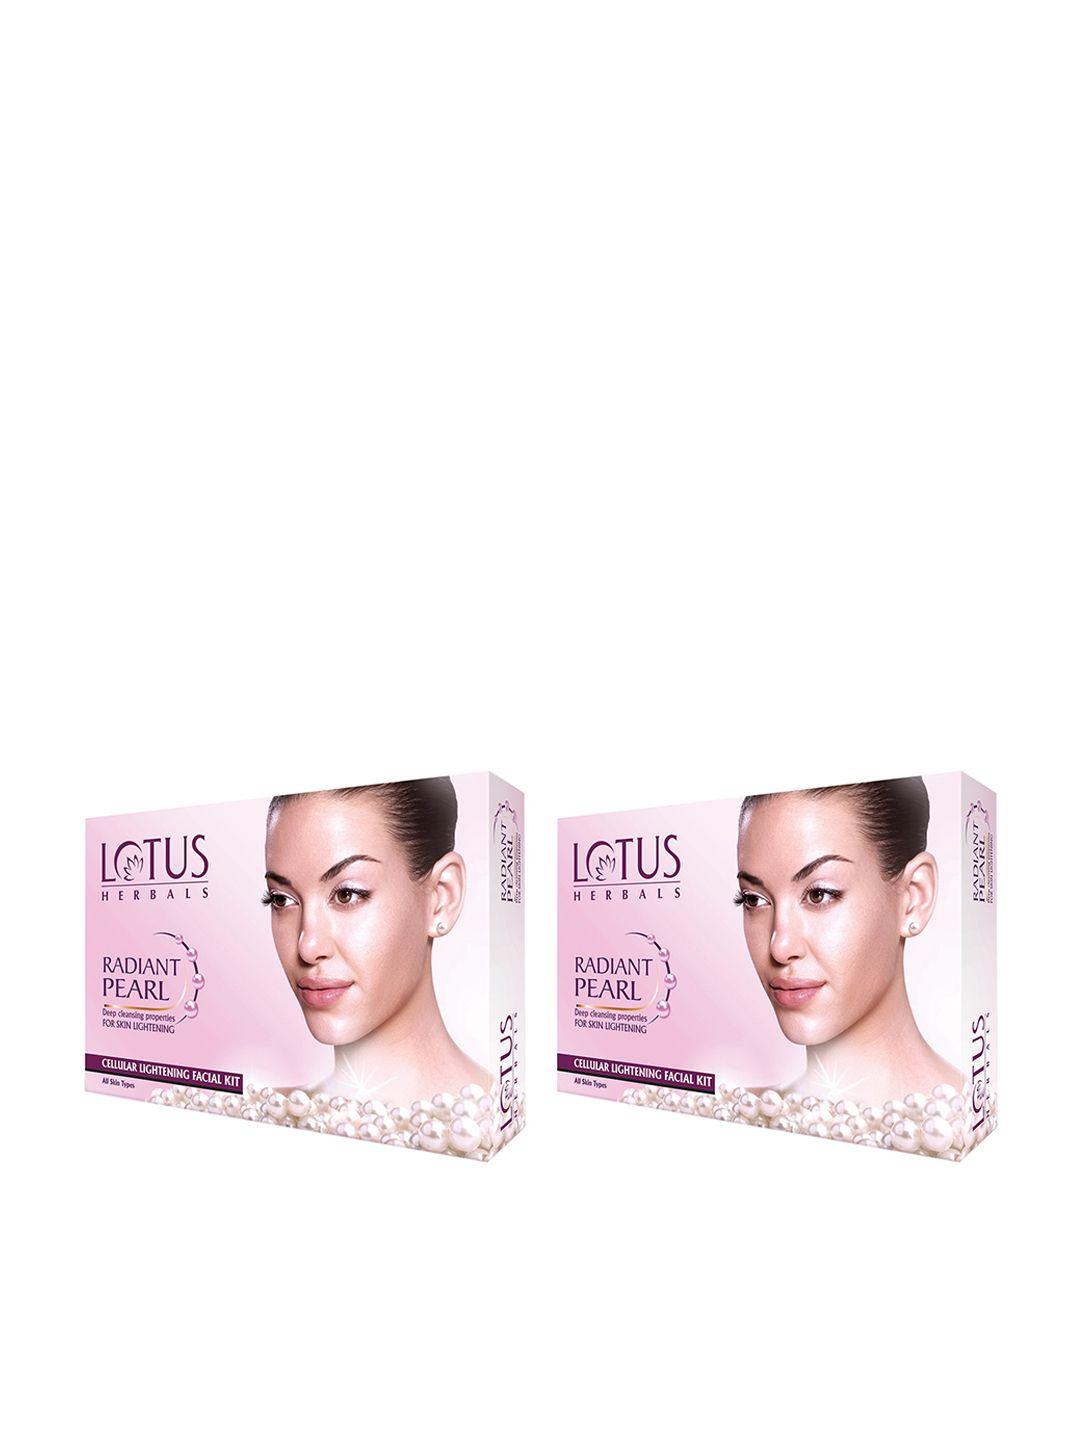 lotus herbals set of 2 radiant pearl cellular lightening facial kits - 4 kits each